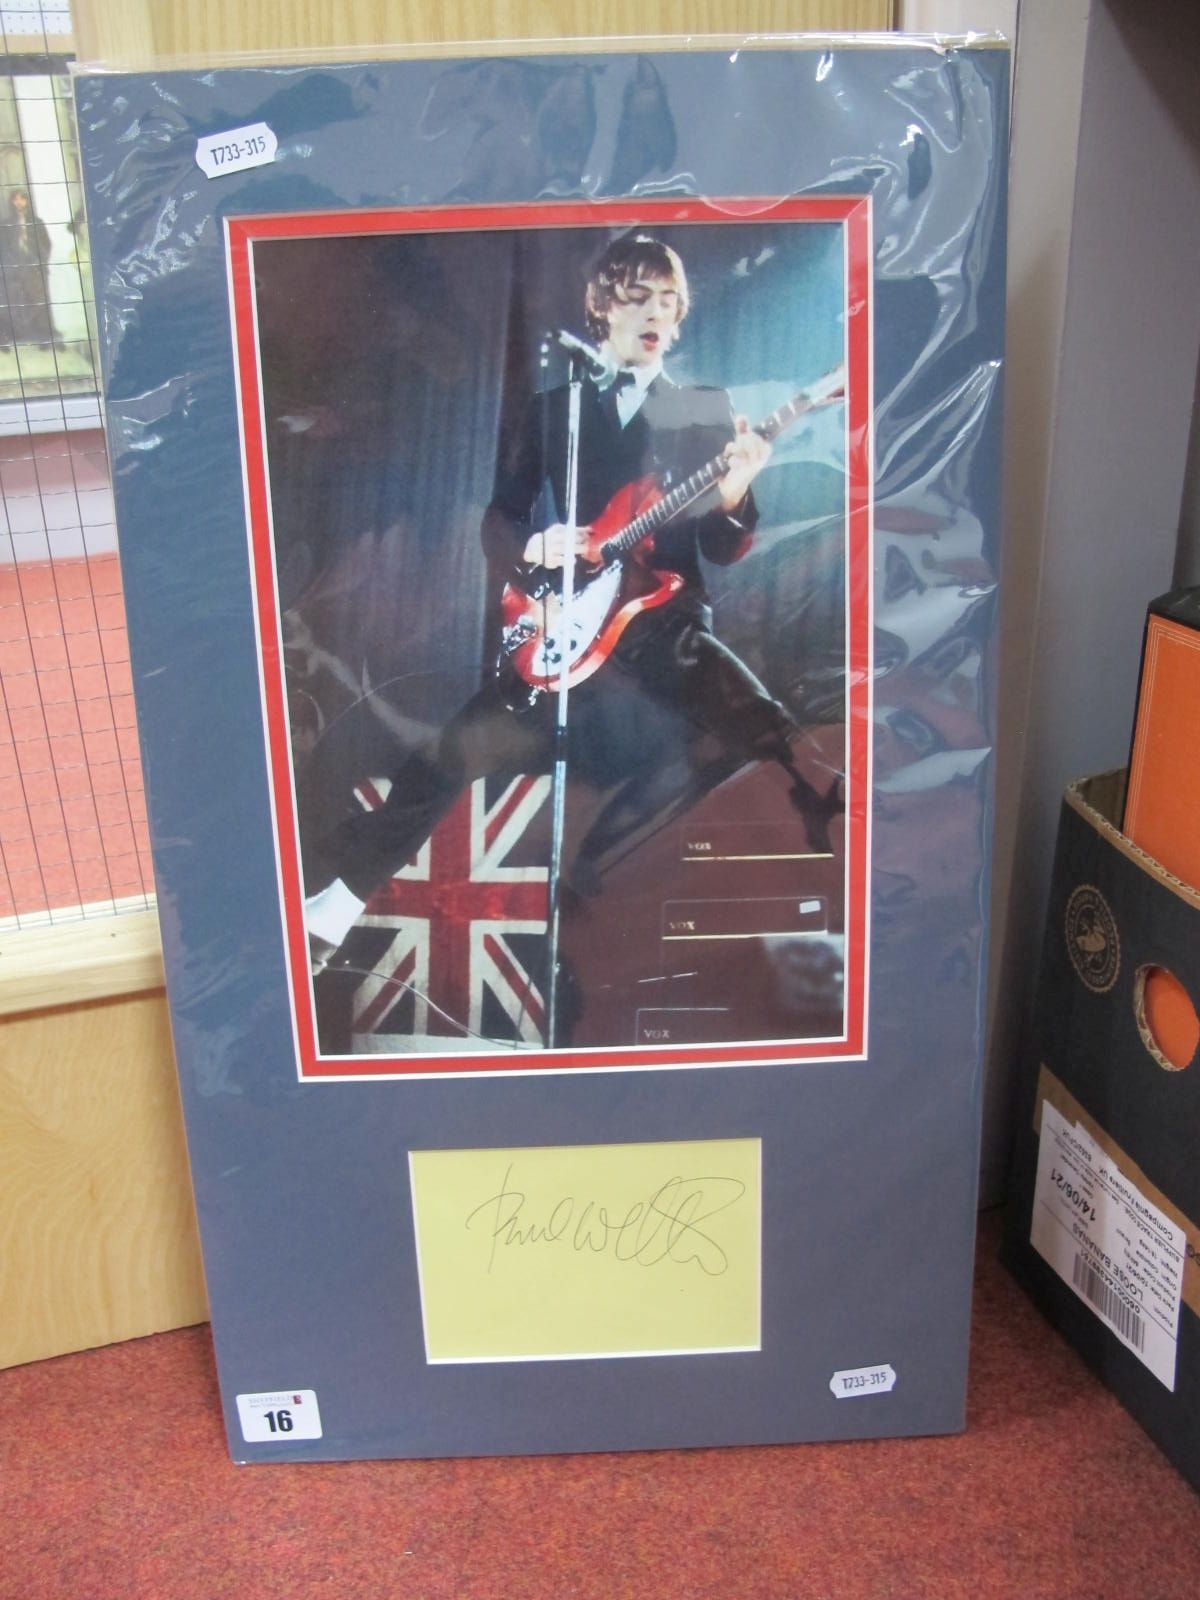 Paul Weller Signature (Unverified), mounted alongside a photograph.